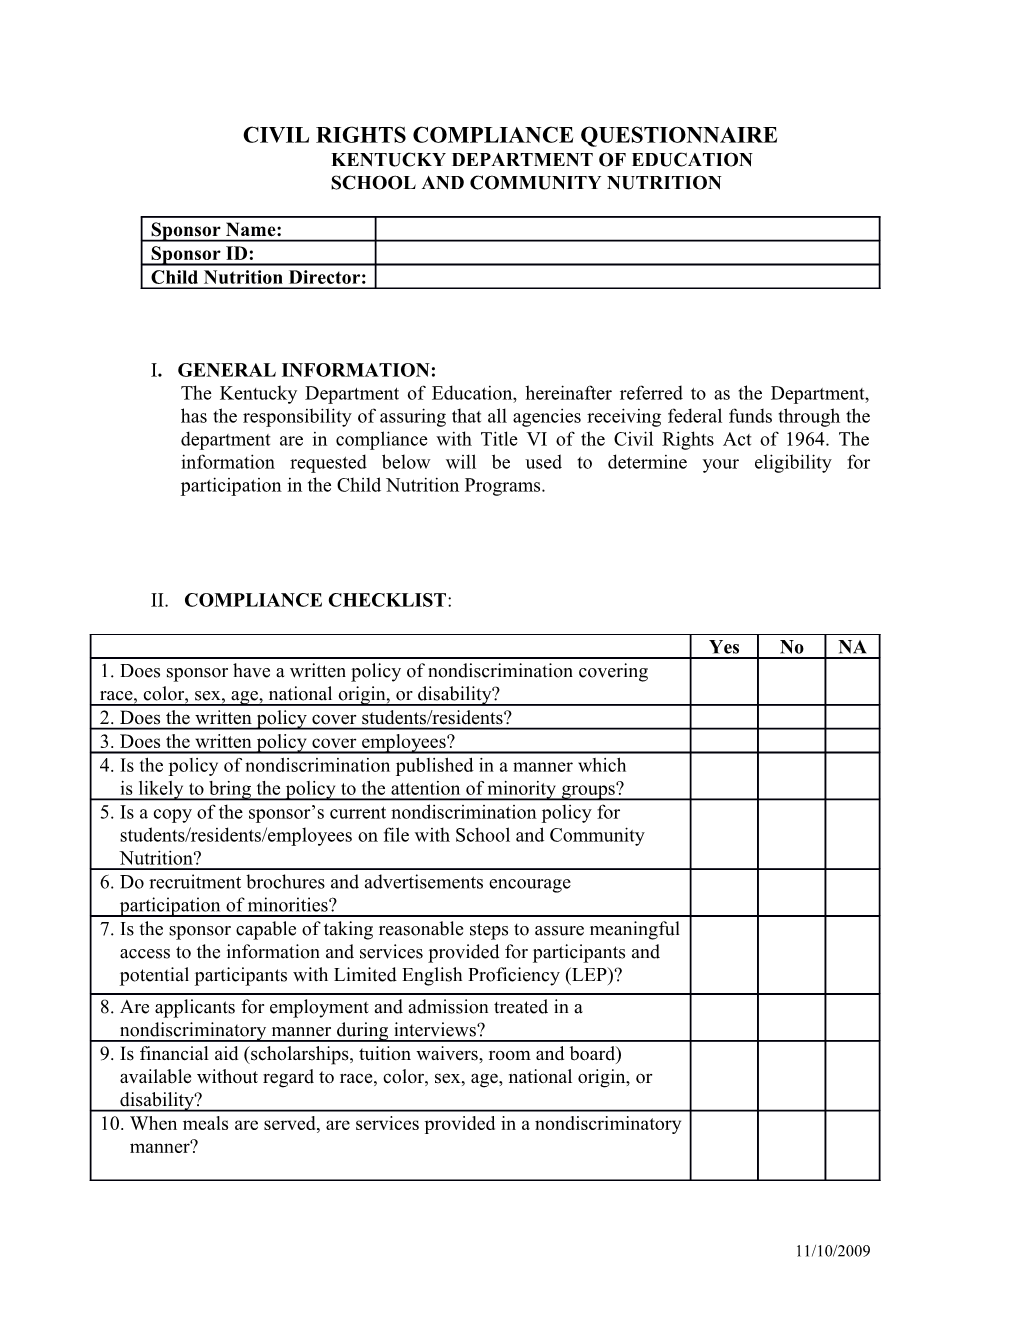 Civil Rights Compliance Questionnaire